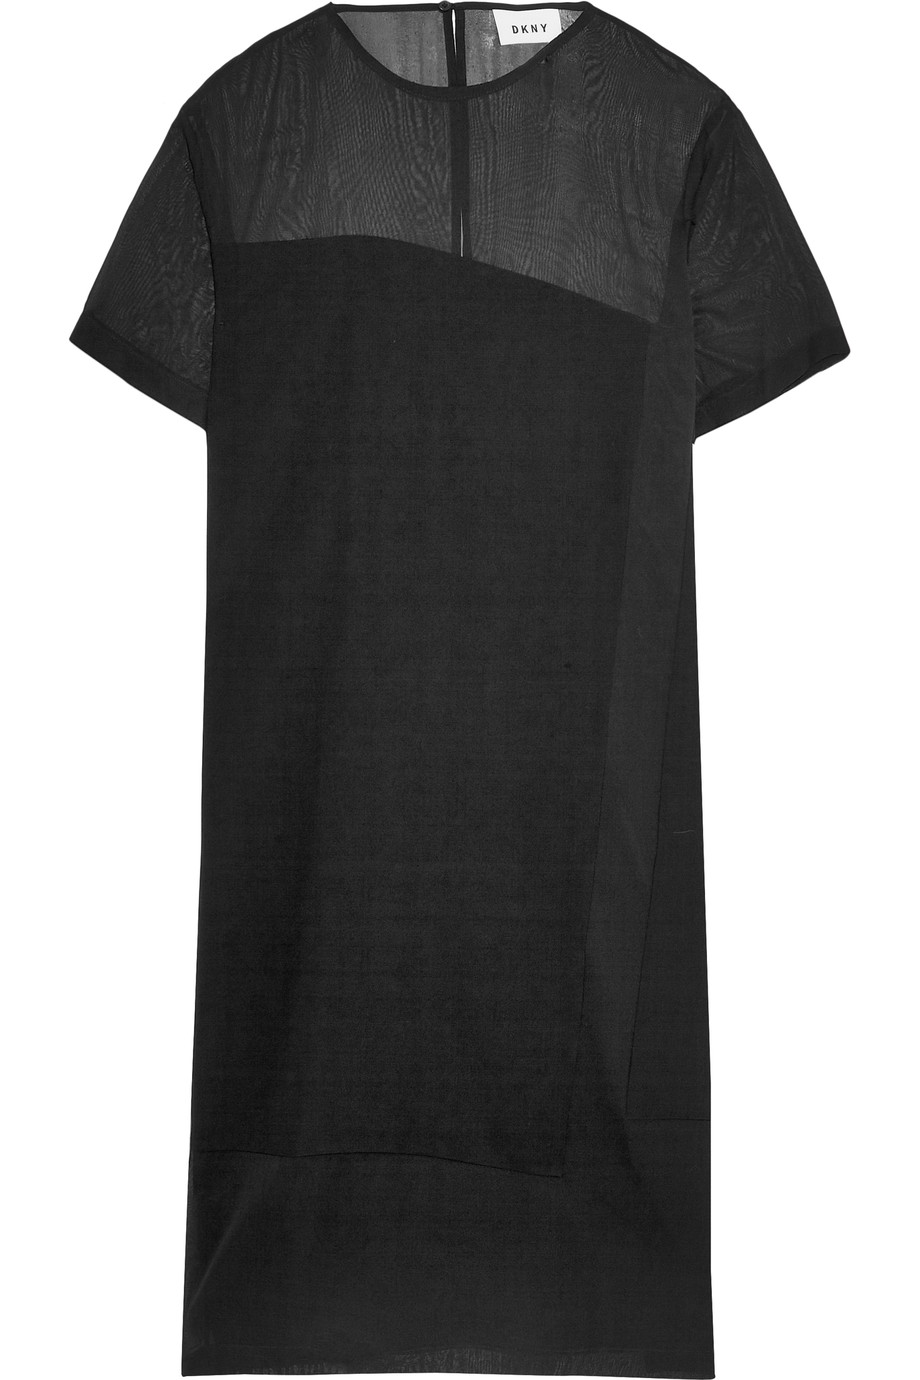 Dkny Sheer-paneled Crepe Dress | ModeSens